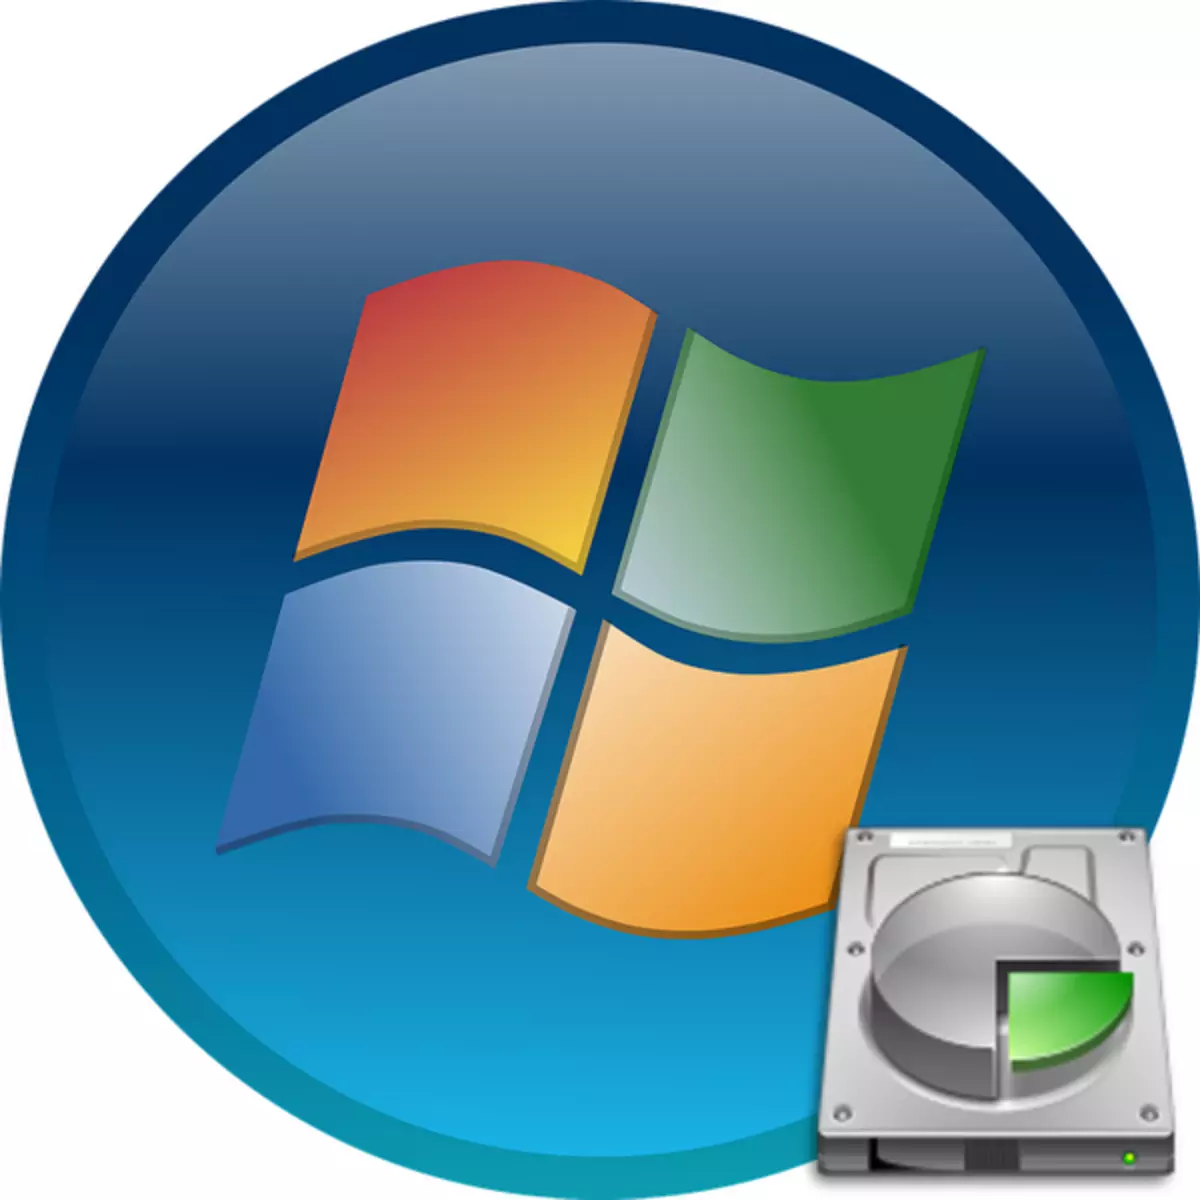 Windows 7 ရှိ "Reserved System" အပိုင်းကိုမည်သို့ဖယ်ရှားရမည်နည်း